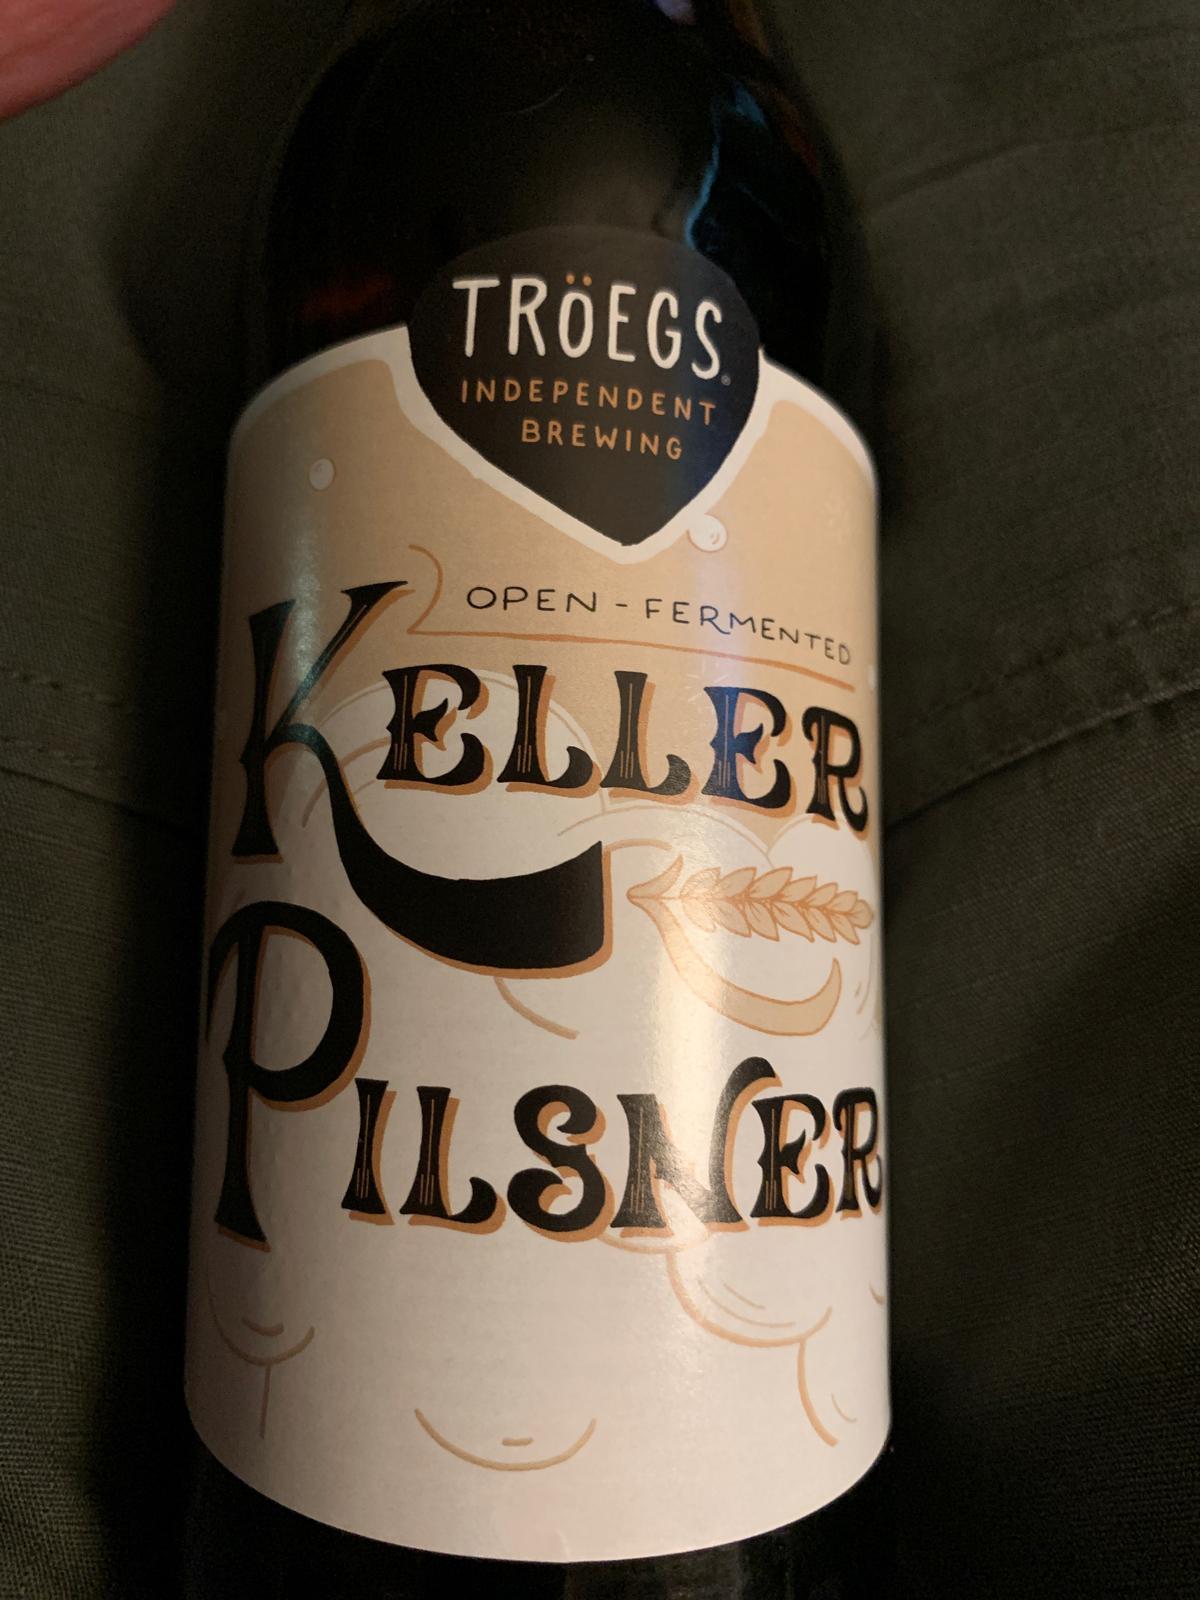 Keller Pilsner